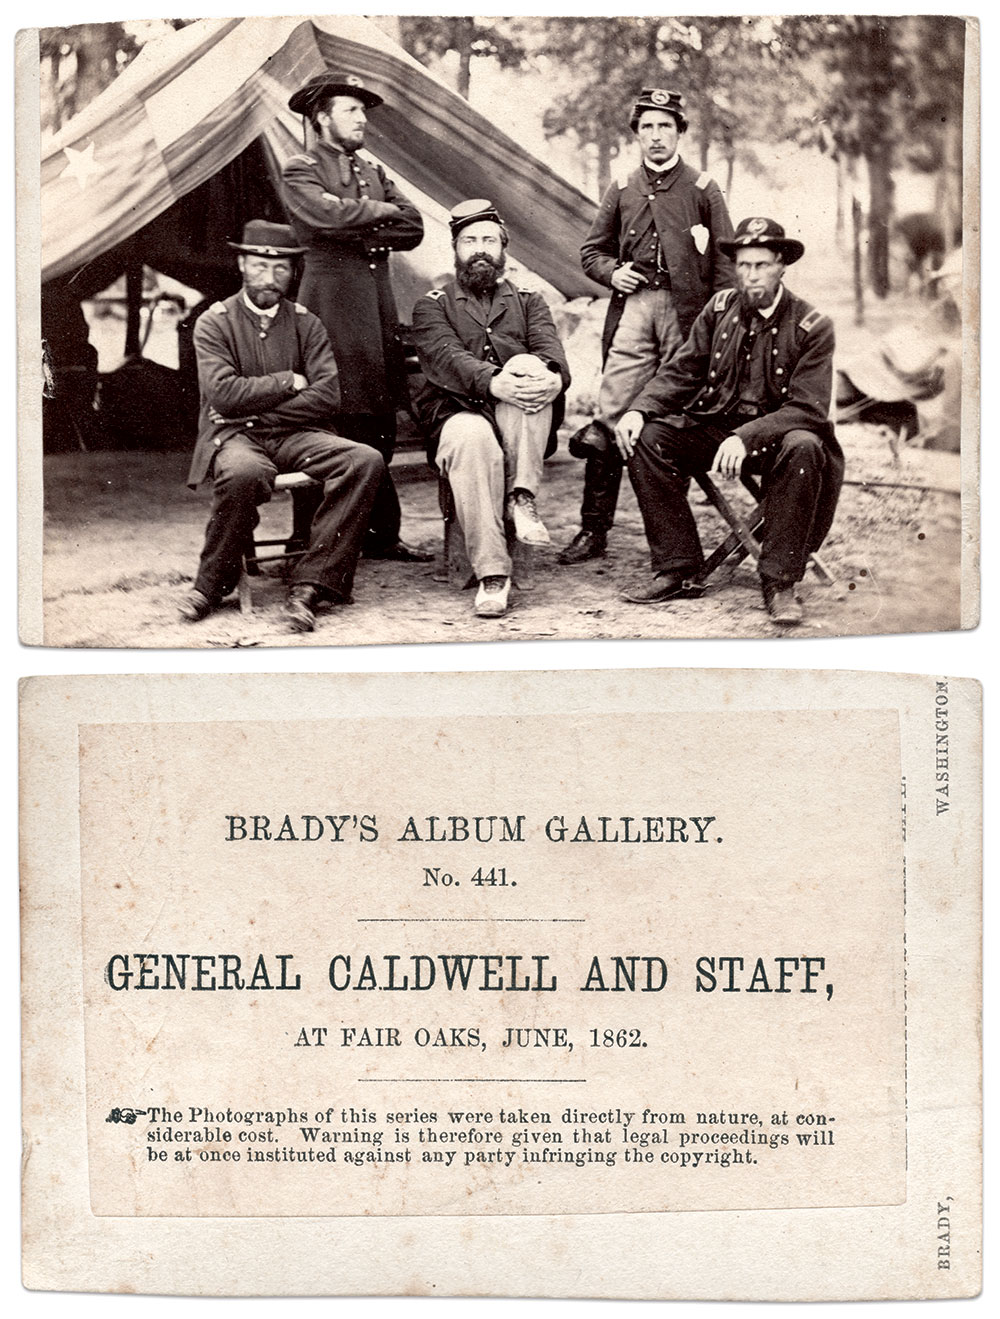 Figure 20: General Caldwell and staff, at Fair Oaks, Va., June 1862; Brady’s Album Gallery, No. 441. Albumen silver print from glass negative. Brian Scherzer Collection.